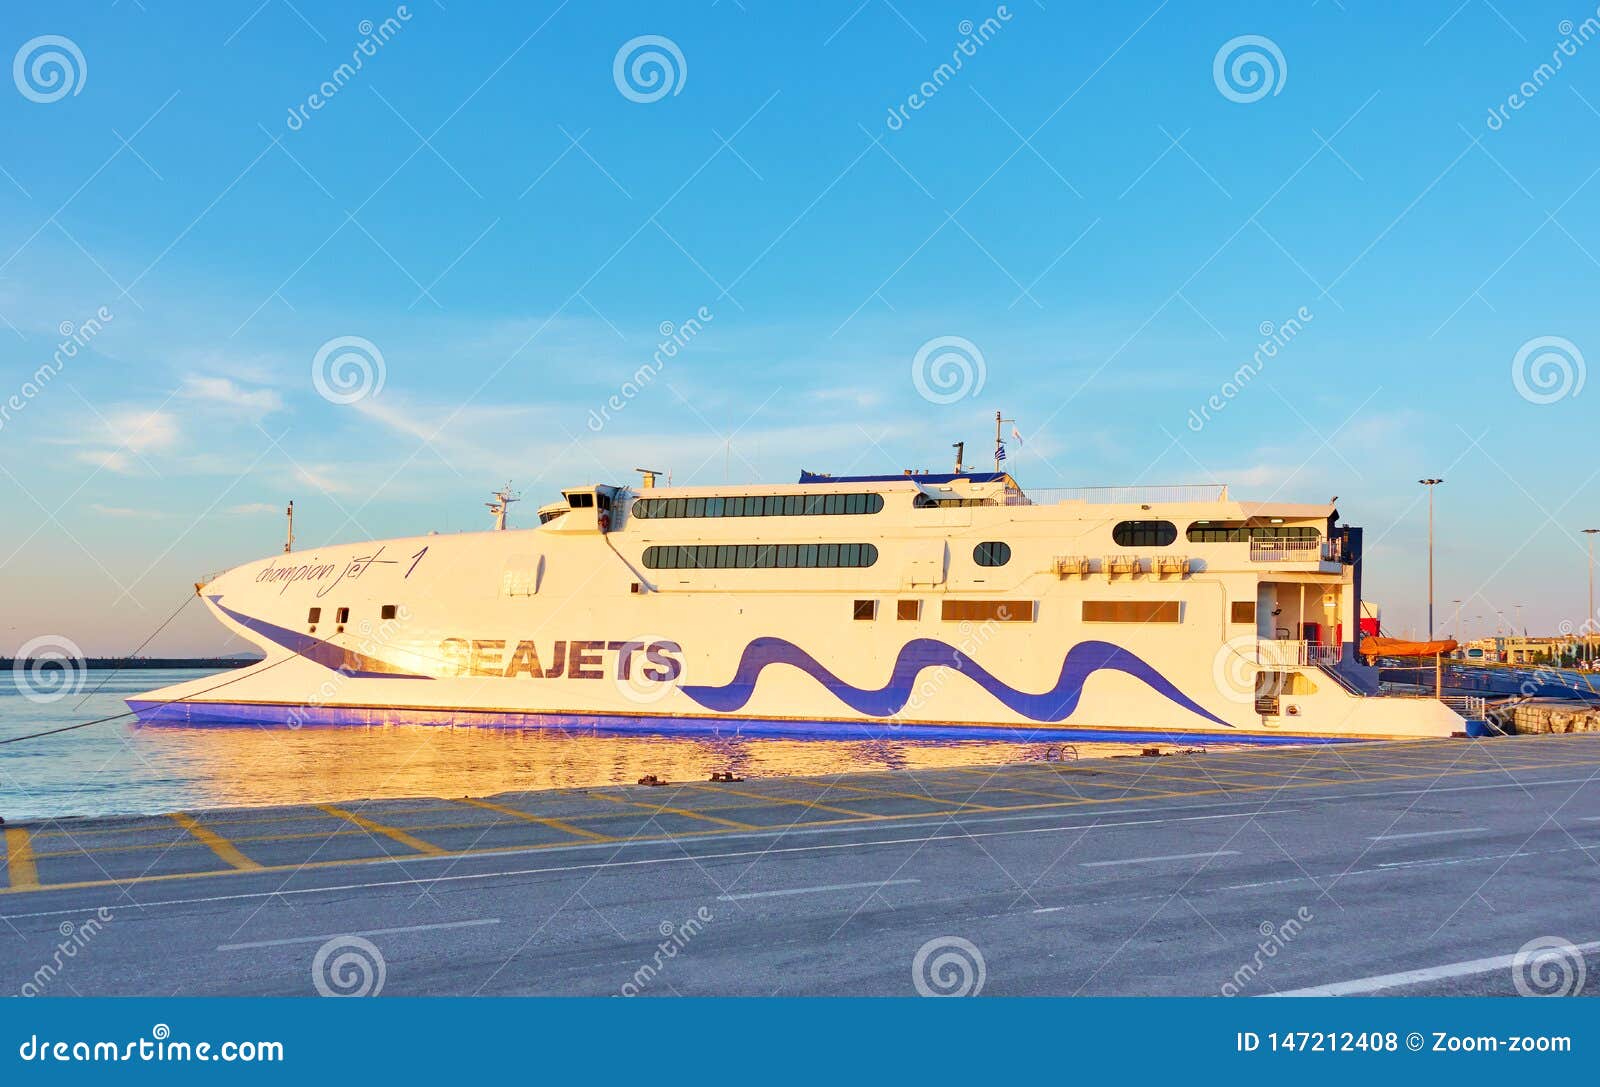 Seajets Jet 1 Ferry Boat Editorial Stock Photo - Image of evening, seajets: